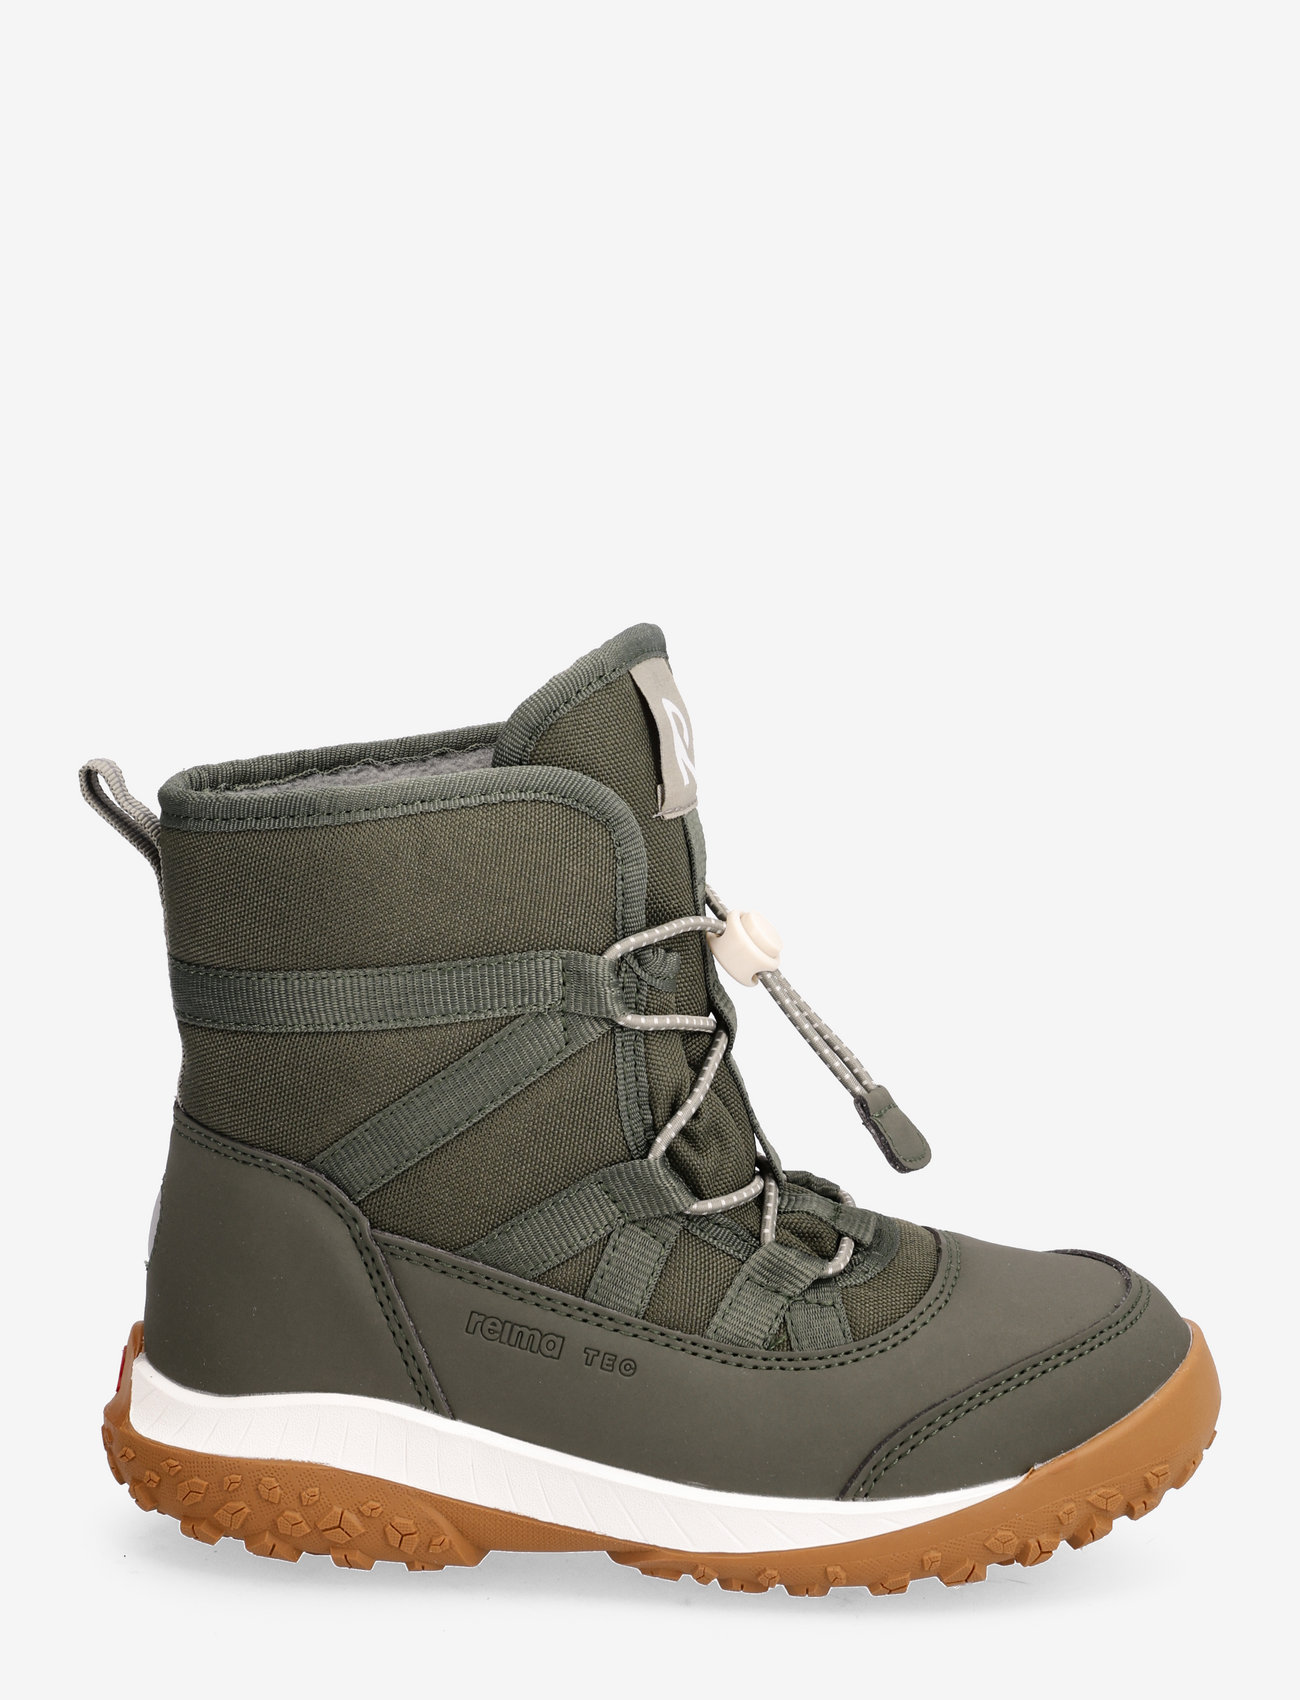 Reima - Reimatec winter boots, Myrsky - vaikams - thyme green - 1